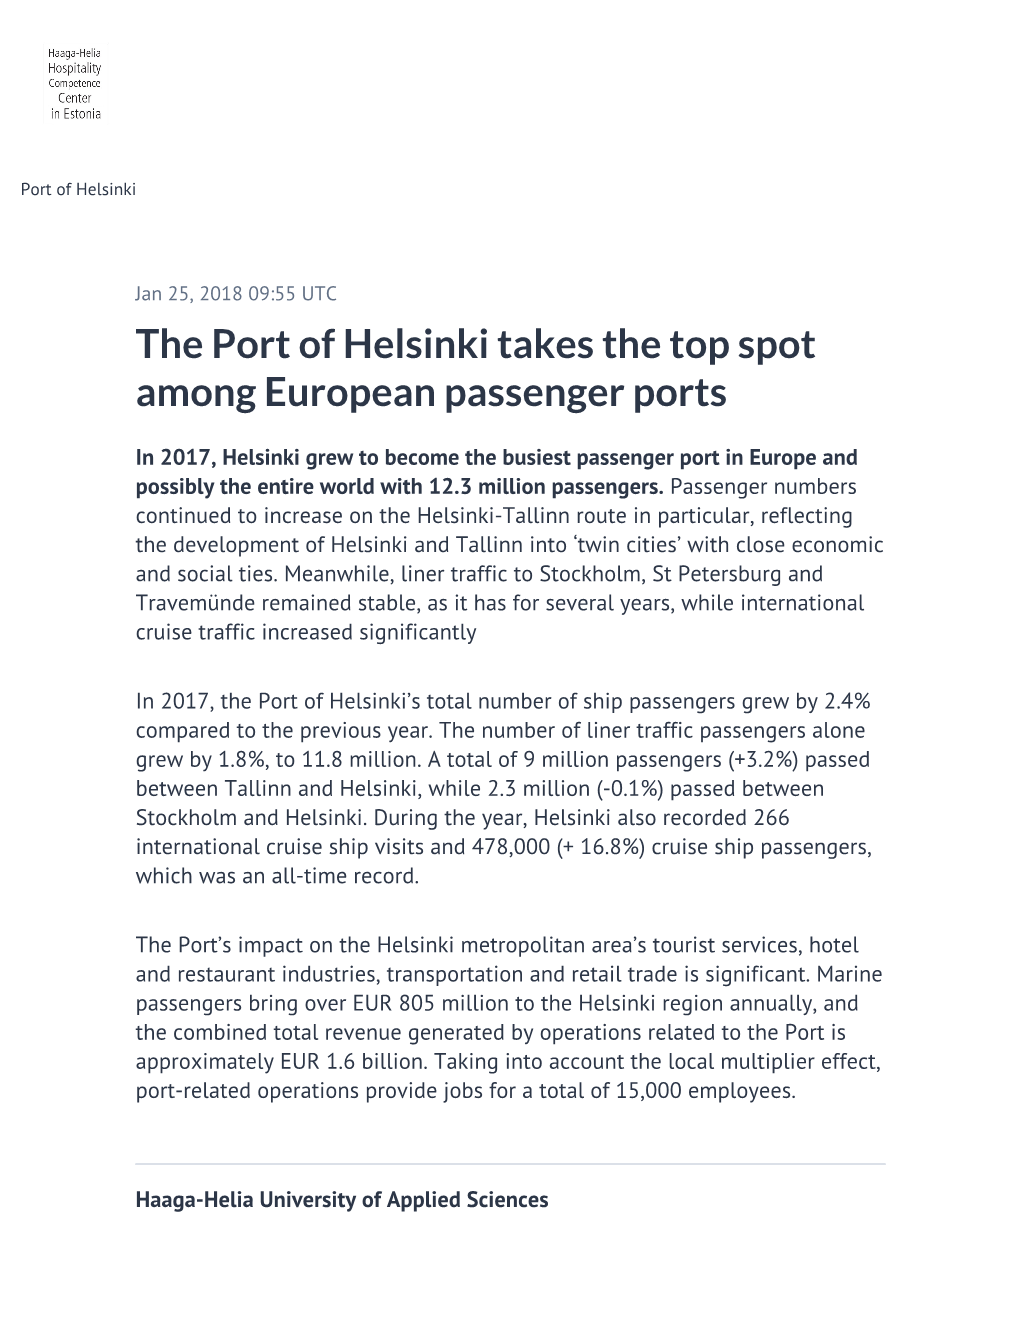 The Port of Helsinki Takes the Top Spot Among European Passenger Ports